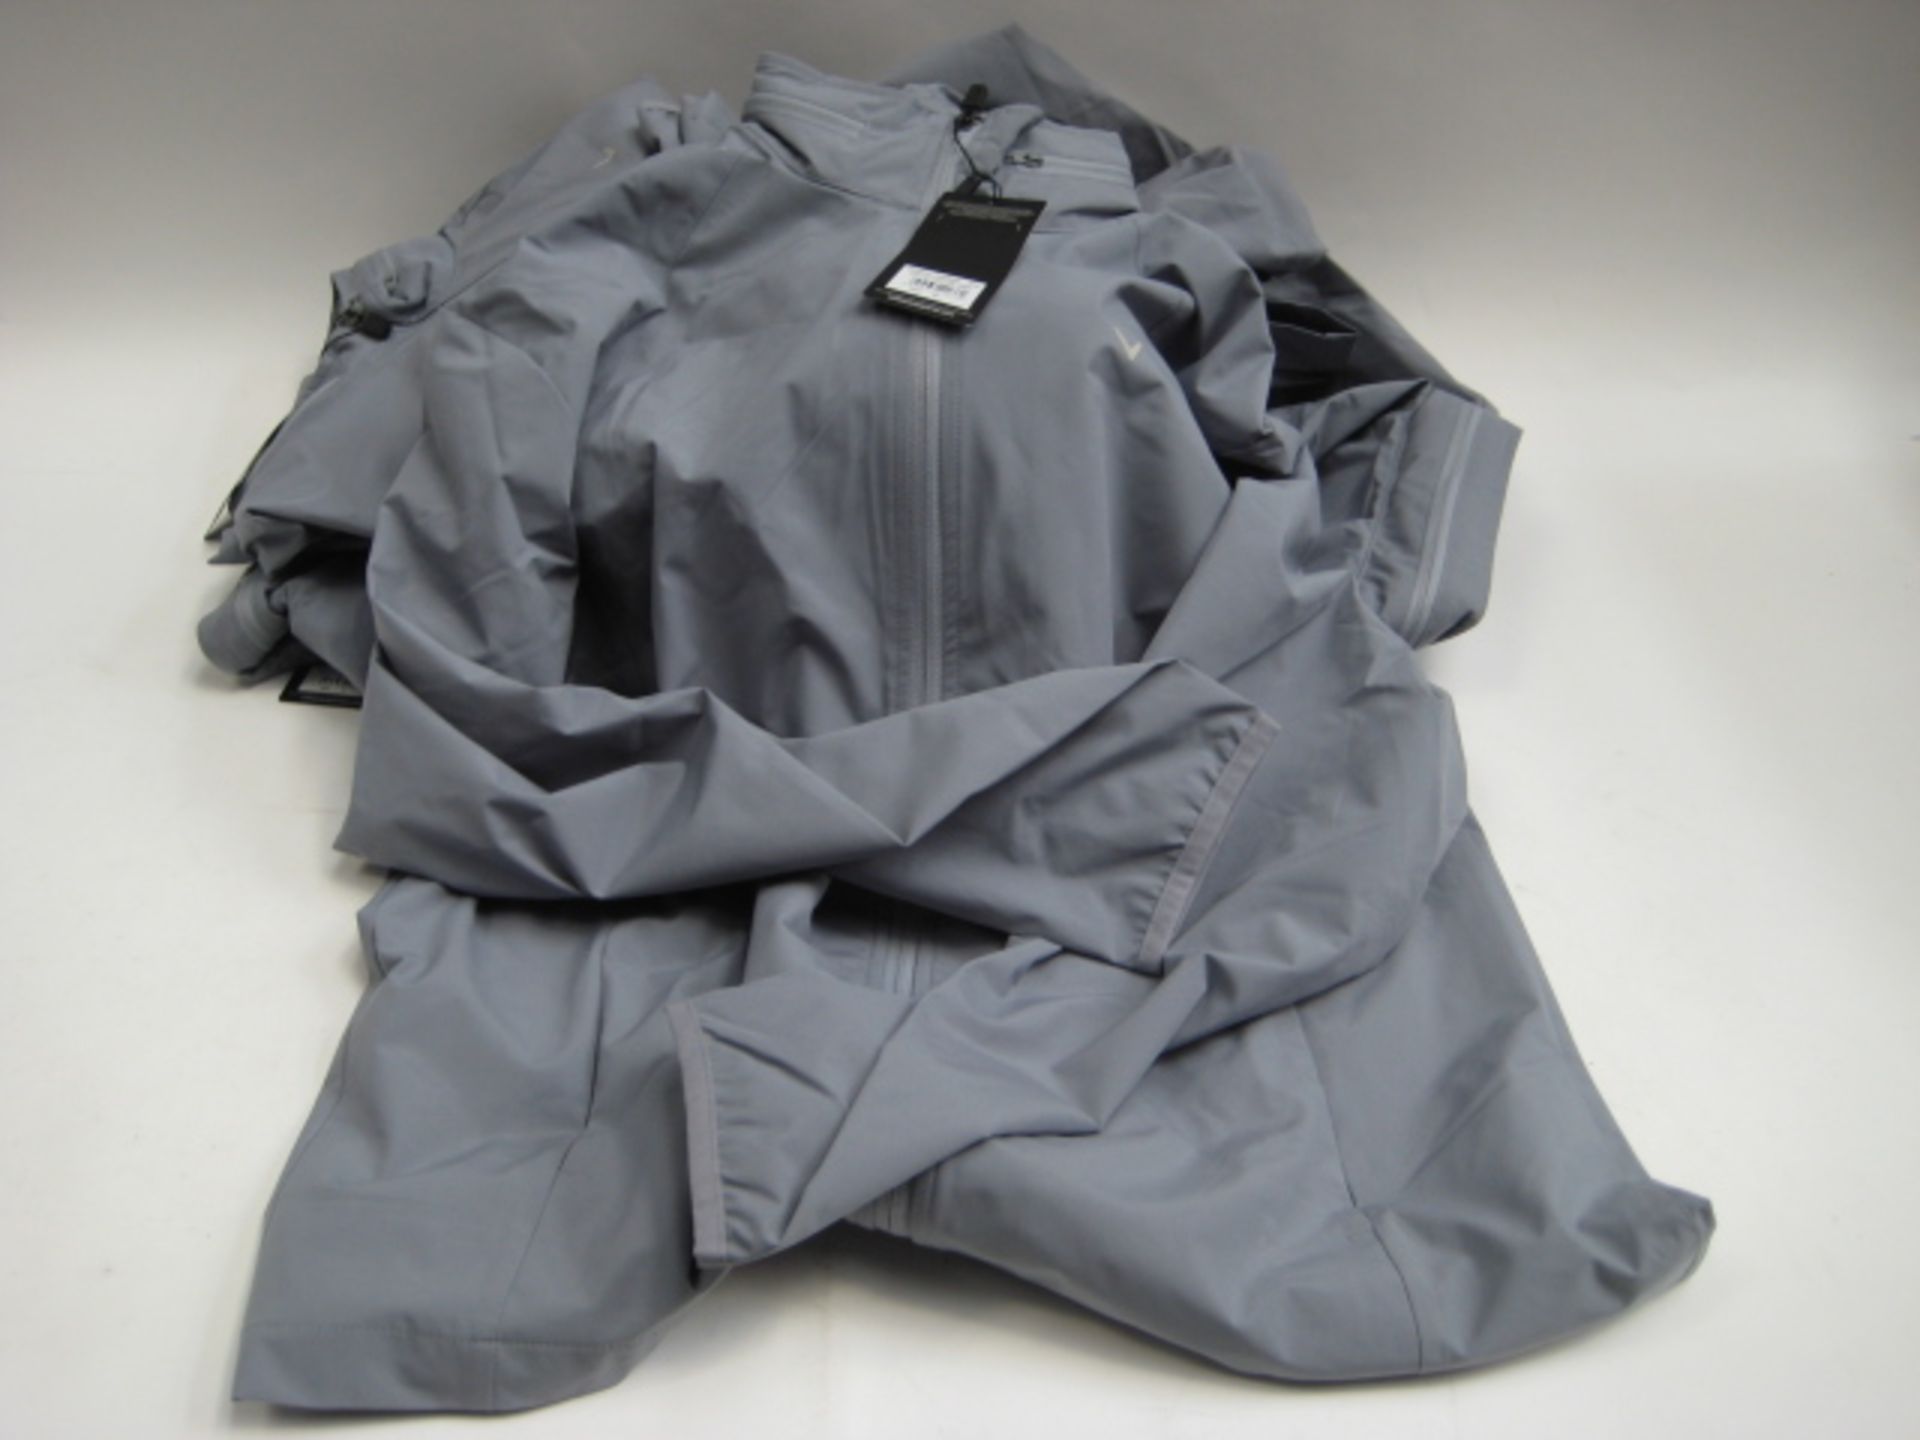 Bag containing six grey Calloway lightweight jackets, various sizes